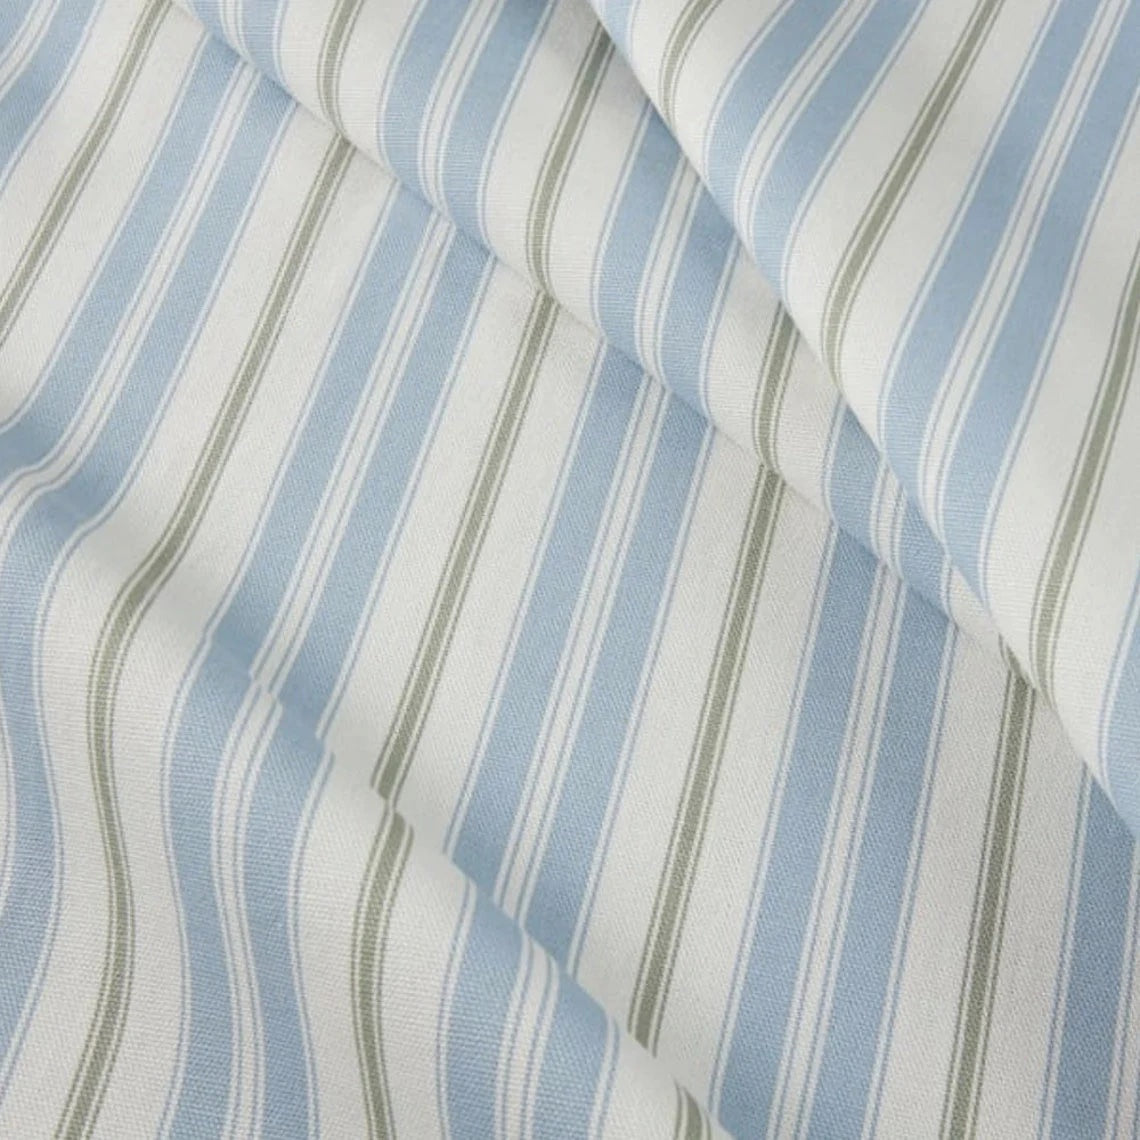 pillow sham in newbury antique blue stripe- blue, green, white